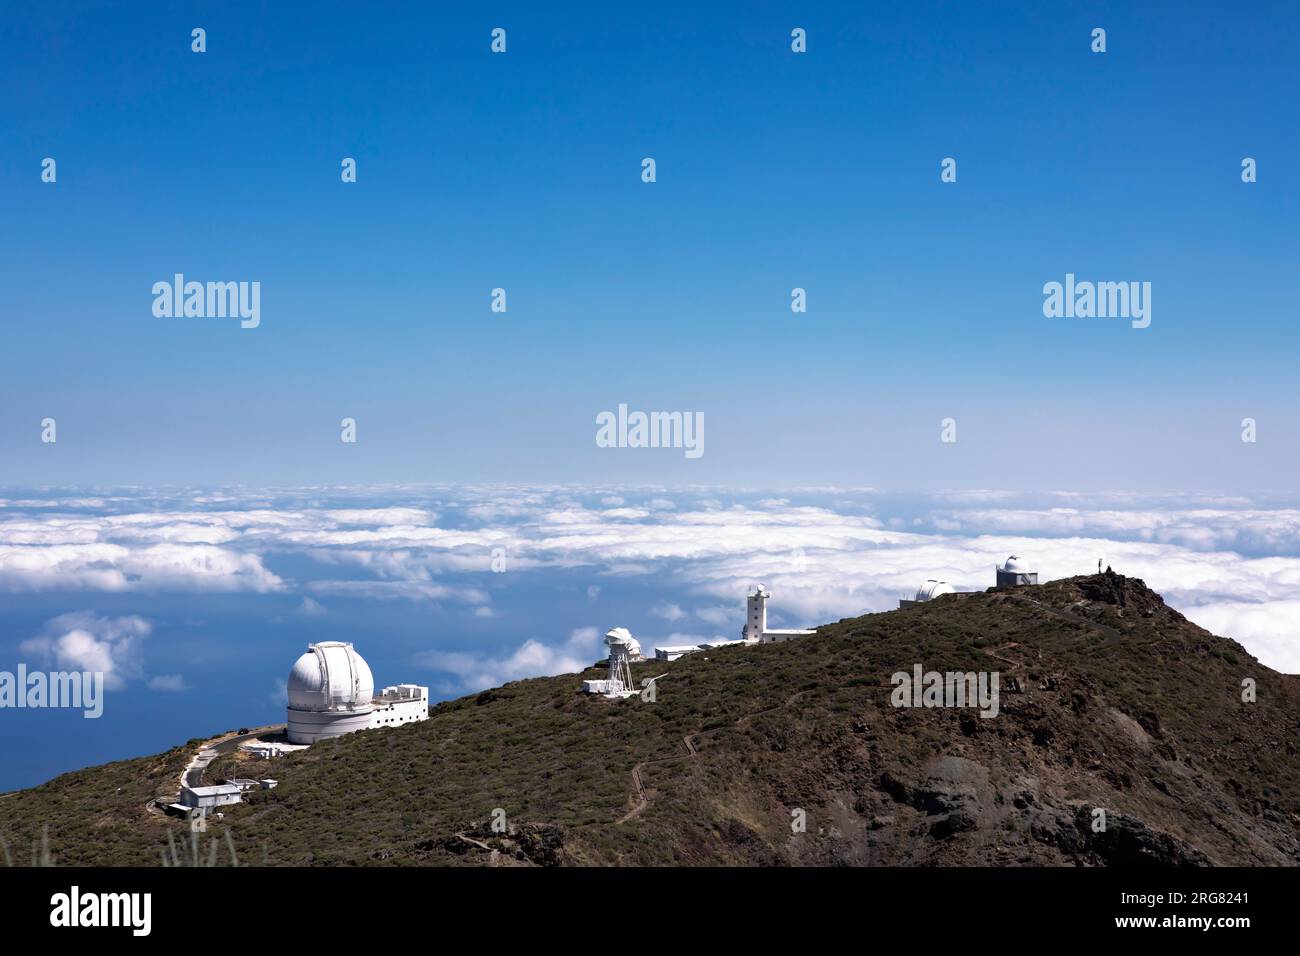 Internationales Raumbeobachtungszentrum im Nationalpark Caldera de Taburiente en El Roque de los Muchachos. Sonniger Tag mit Wolken. Panoramablick Stockfoto